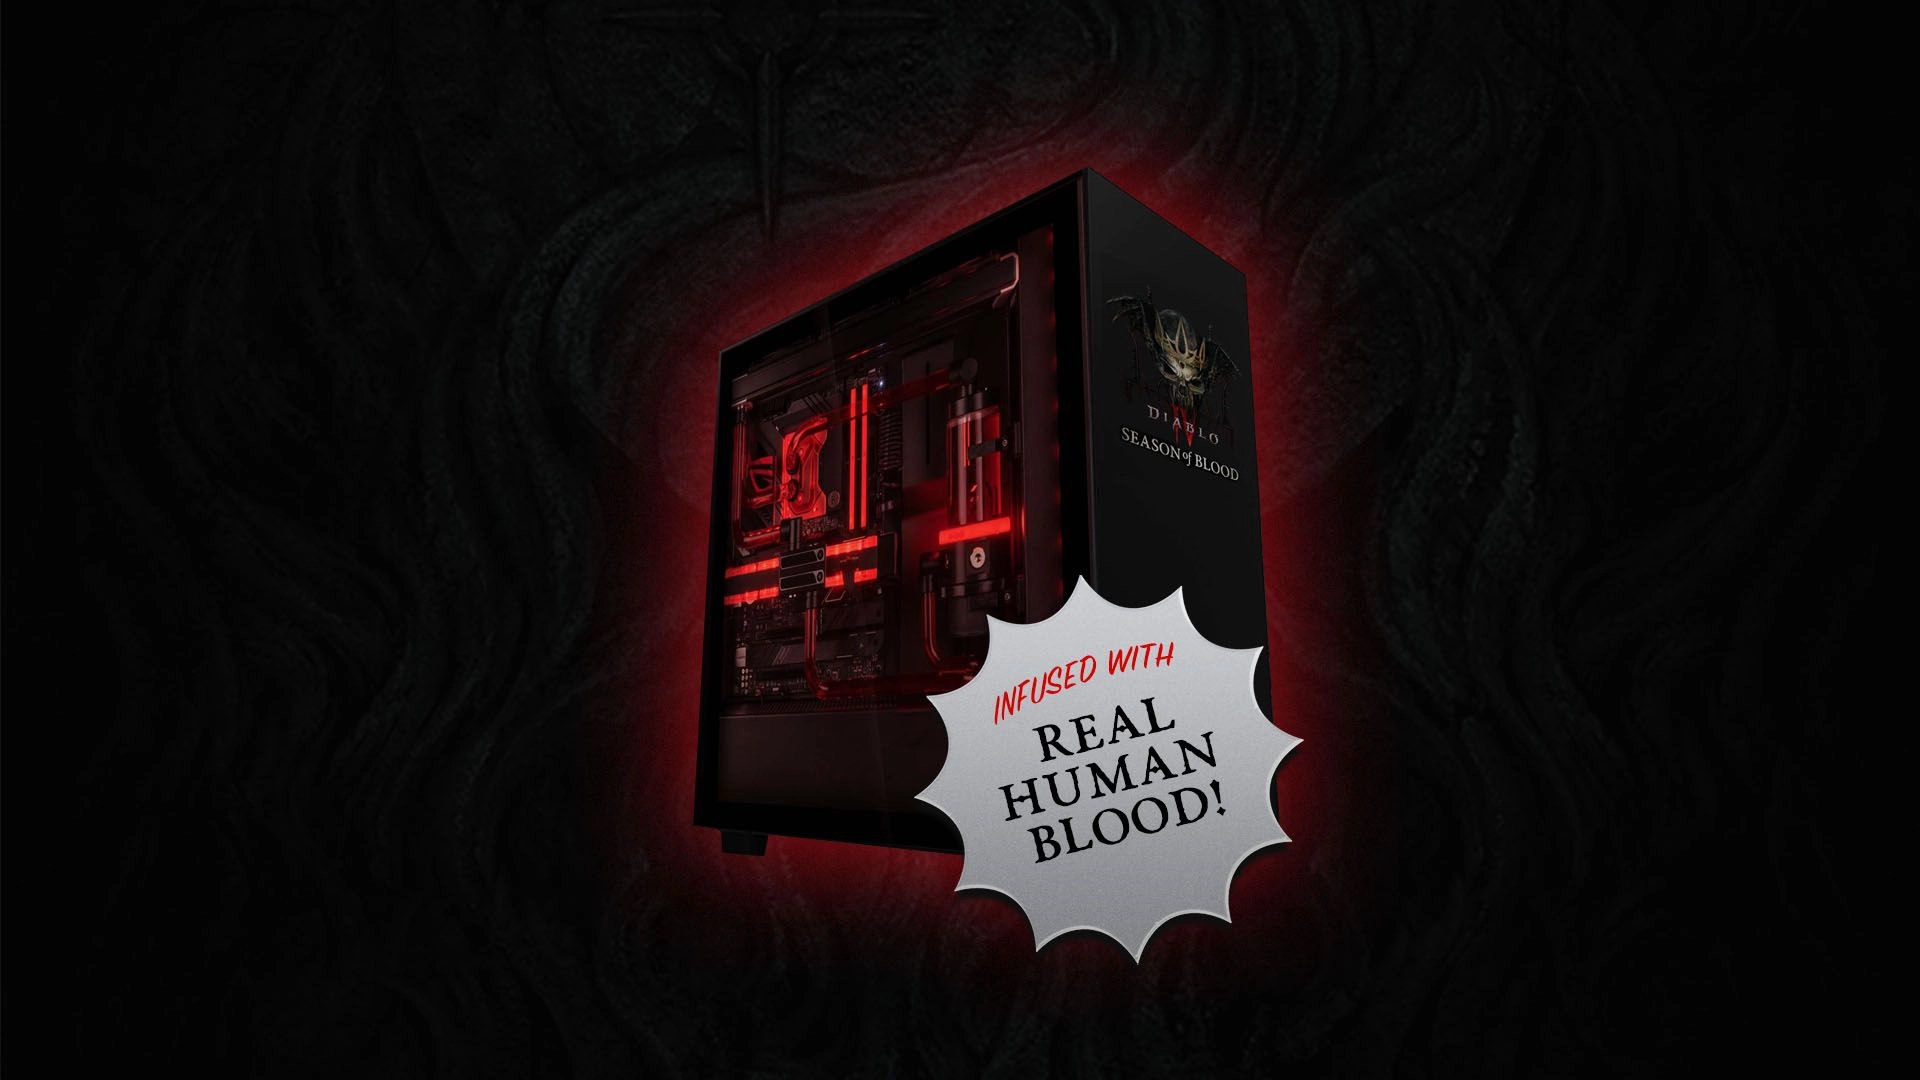 Blizzard Unveils Blood-Infused Gaming PC in Unique PR Stunt